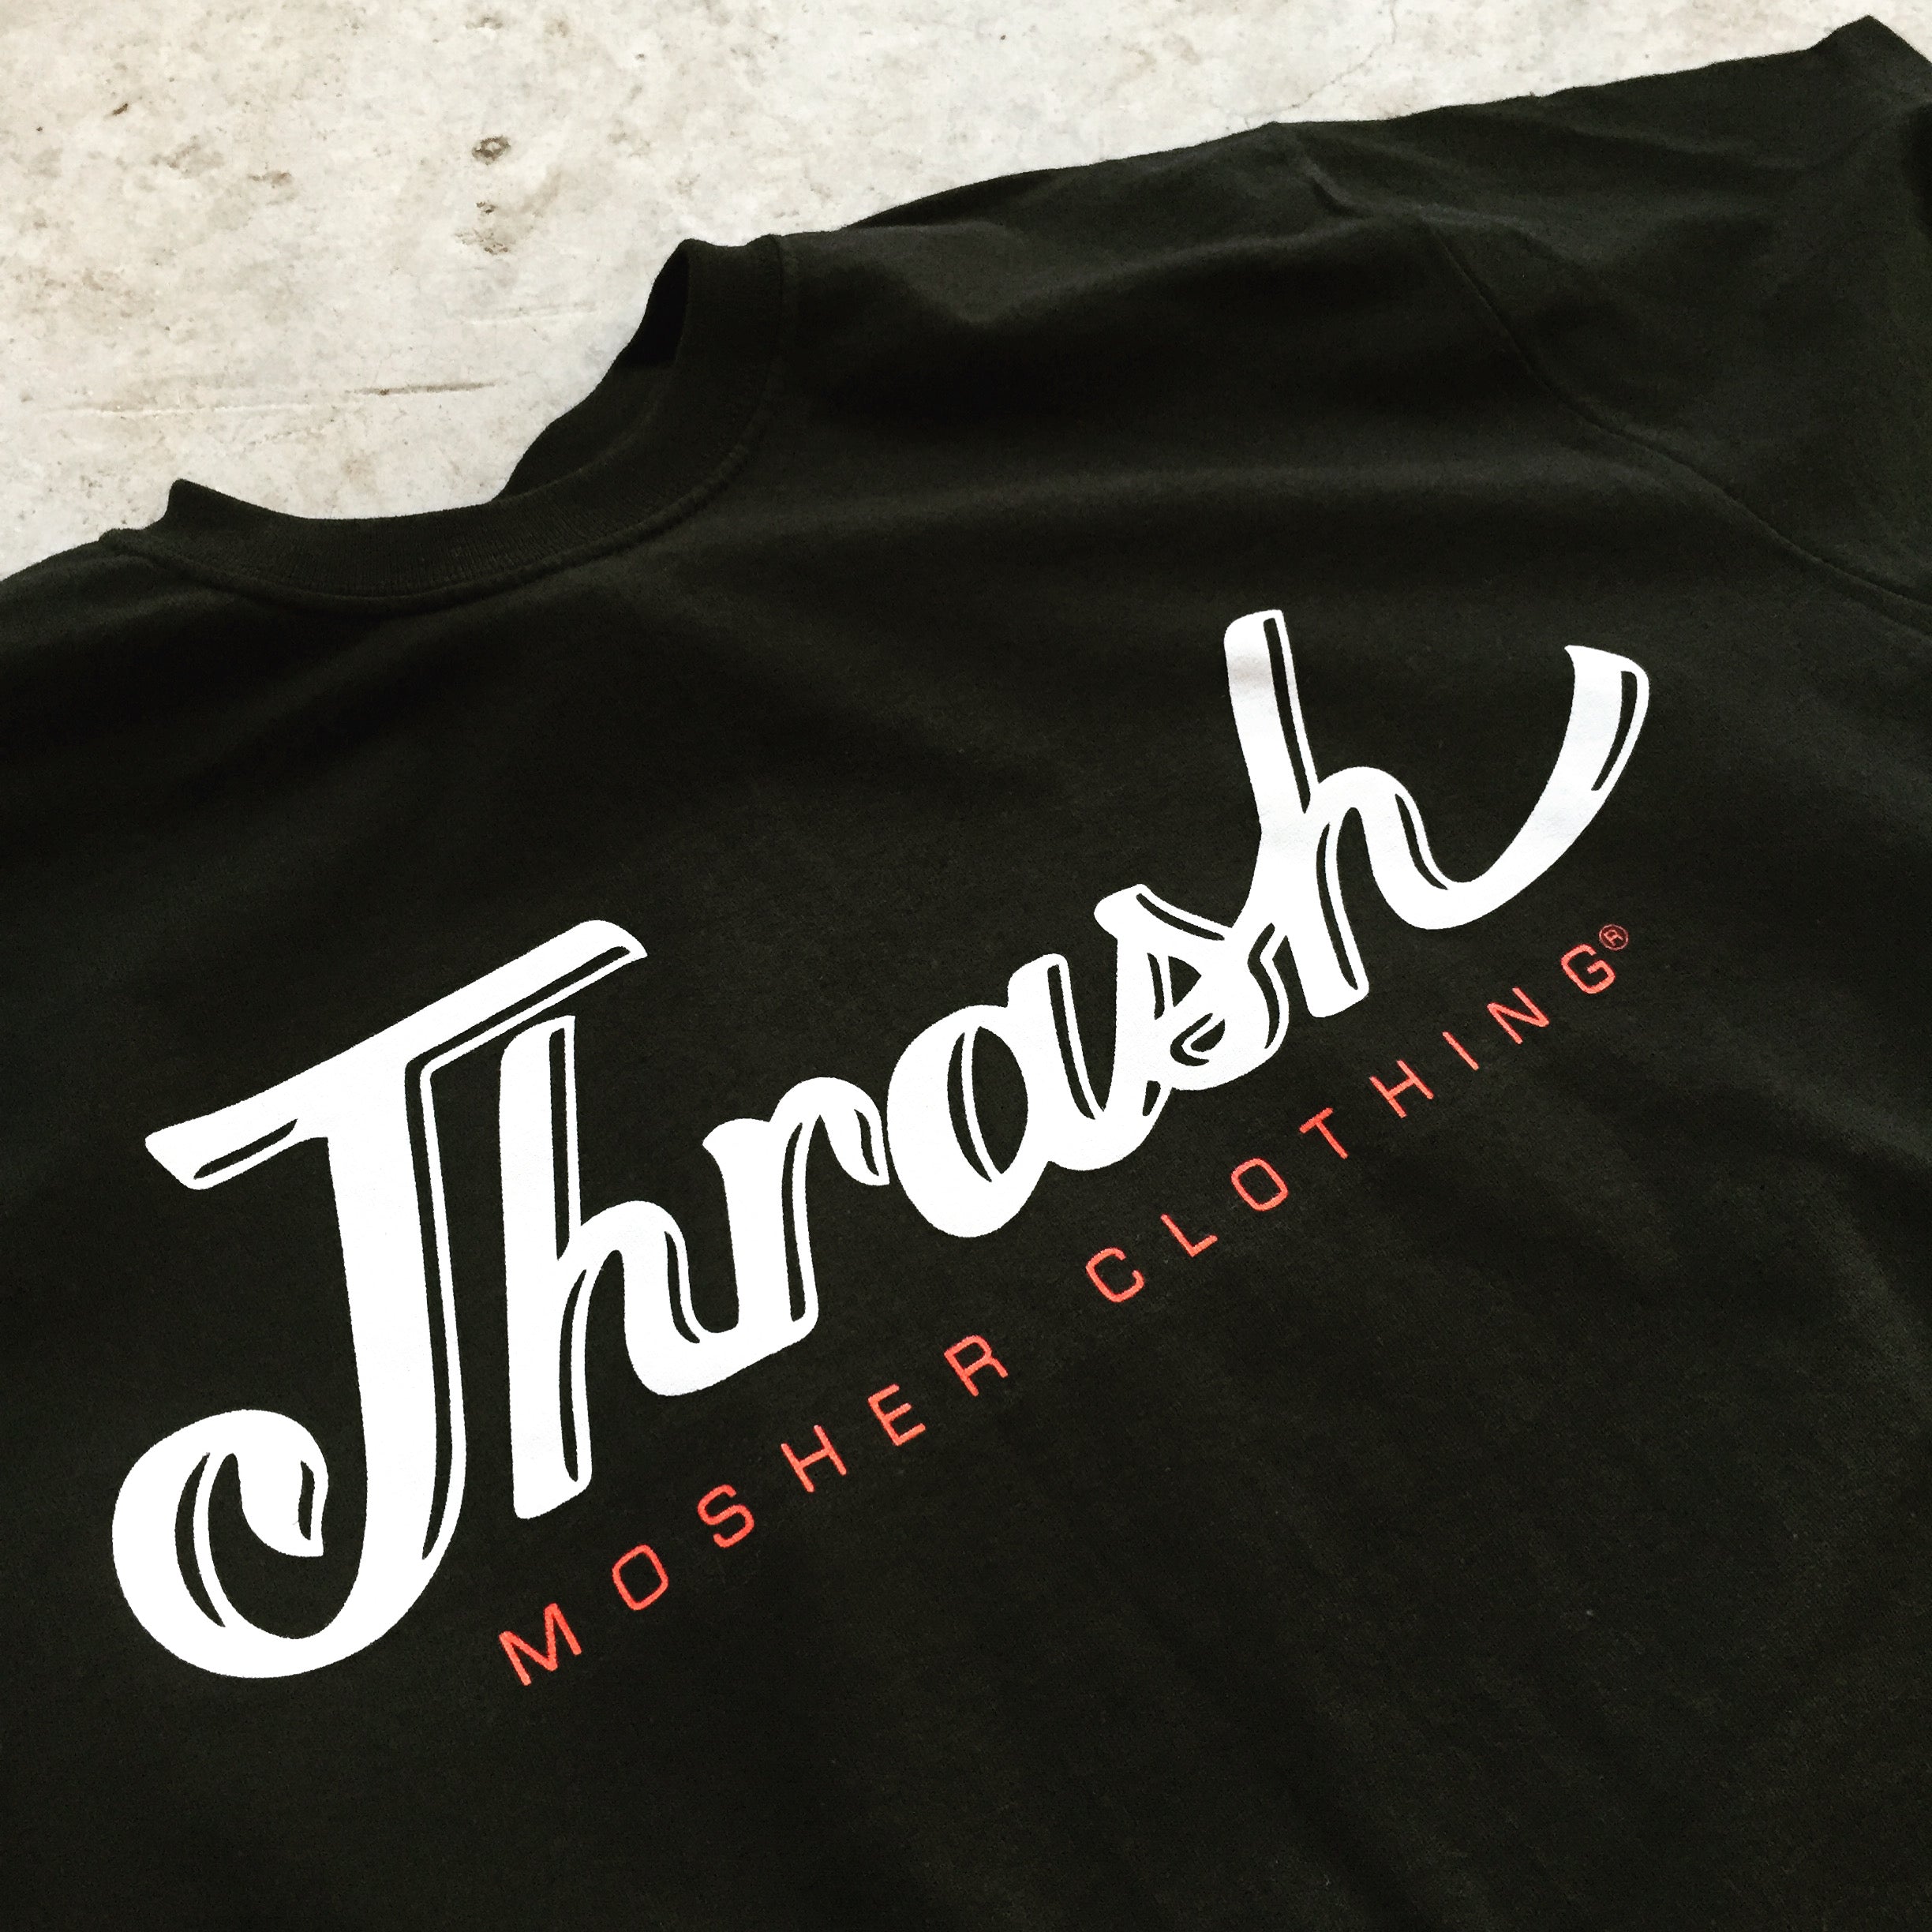 Thrash metal shirt by Mosher Clothing for metalheads worldwide